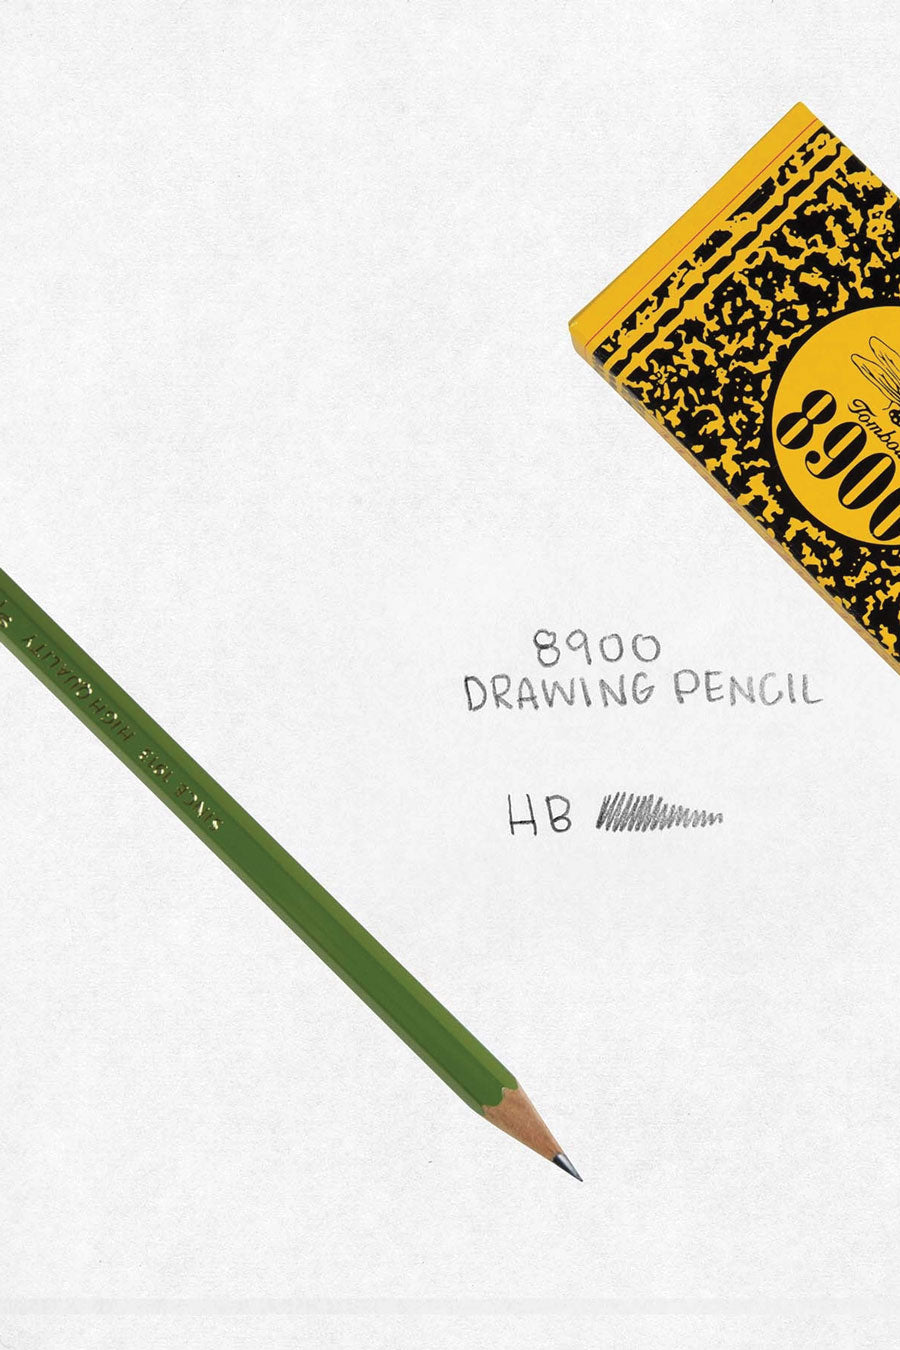 8900 Pencils